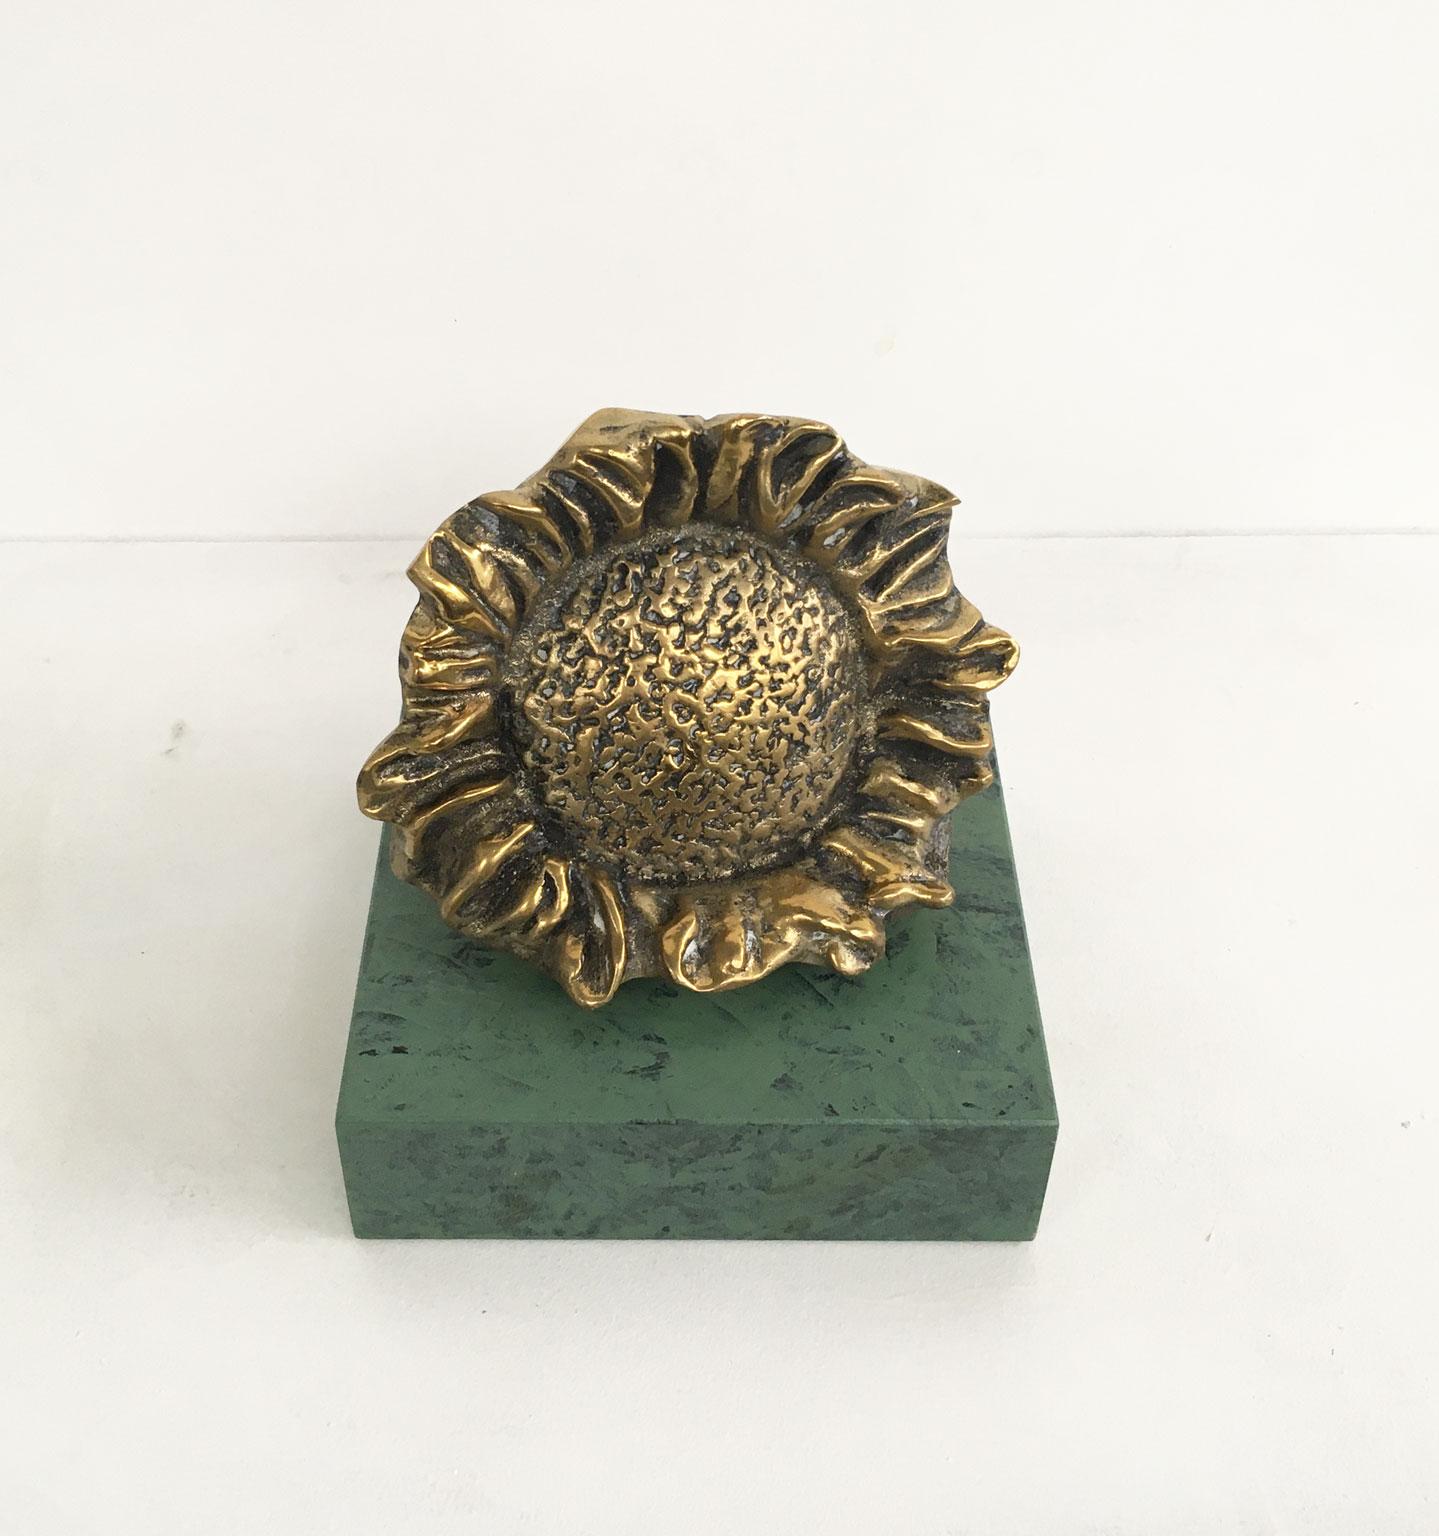 Patrizia Guerresi Maïmouna Figurative Sculpture - Bronze Abstract Sculpture Patrizia Guerresi Girasole Sunflower